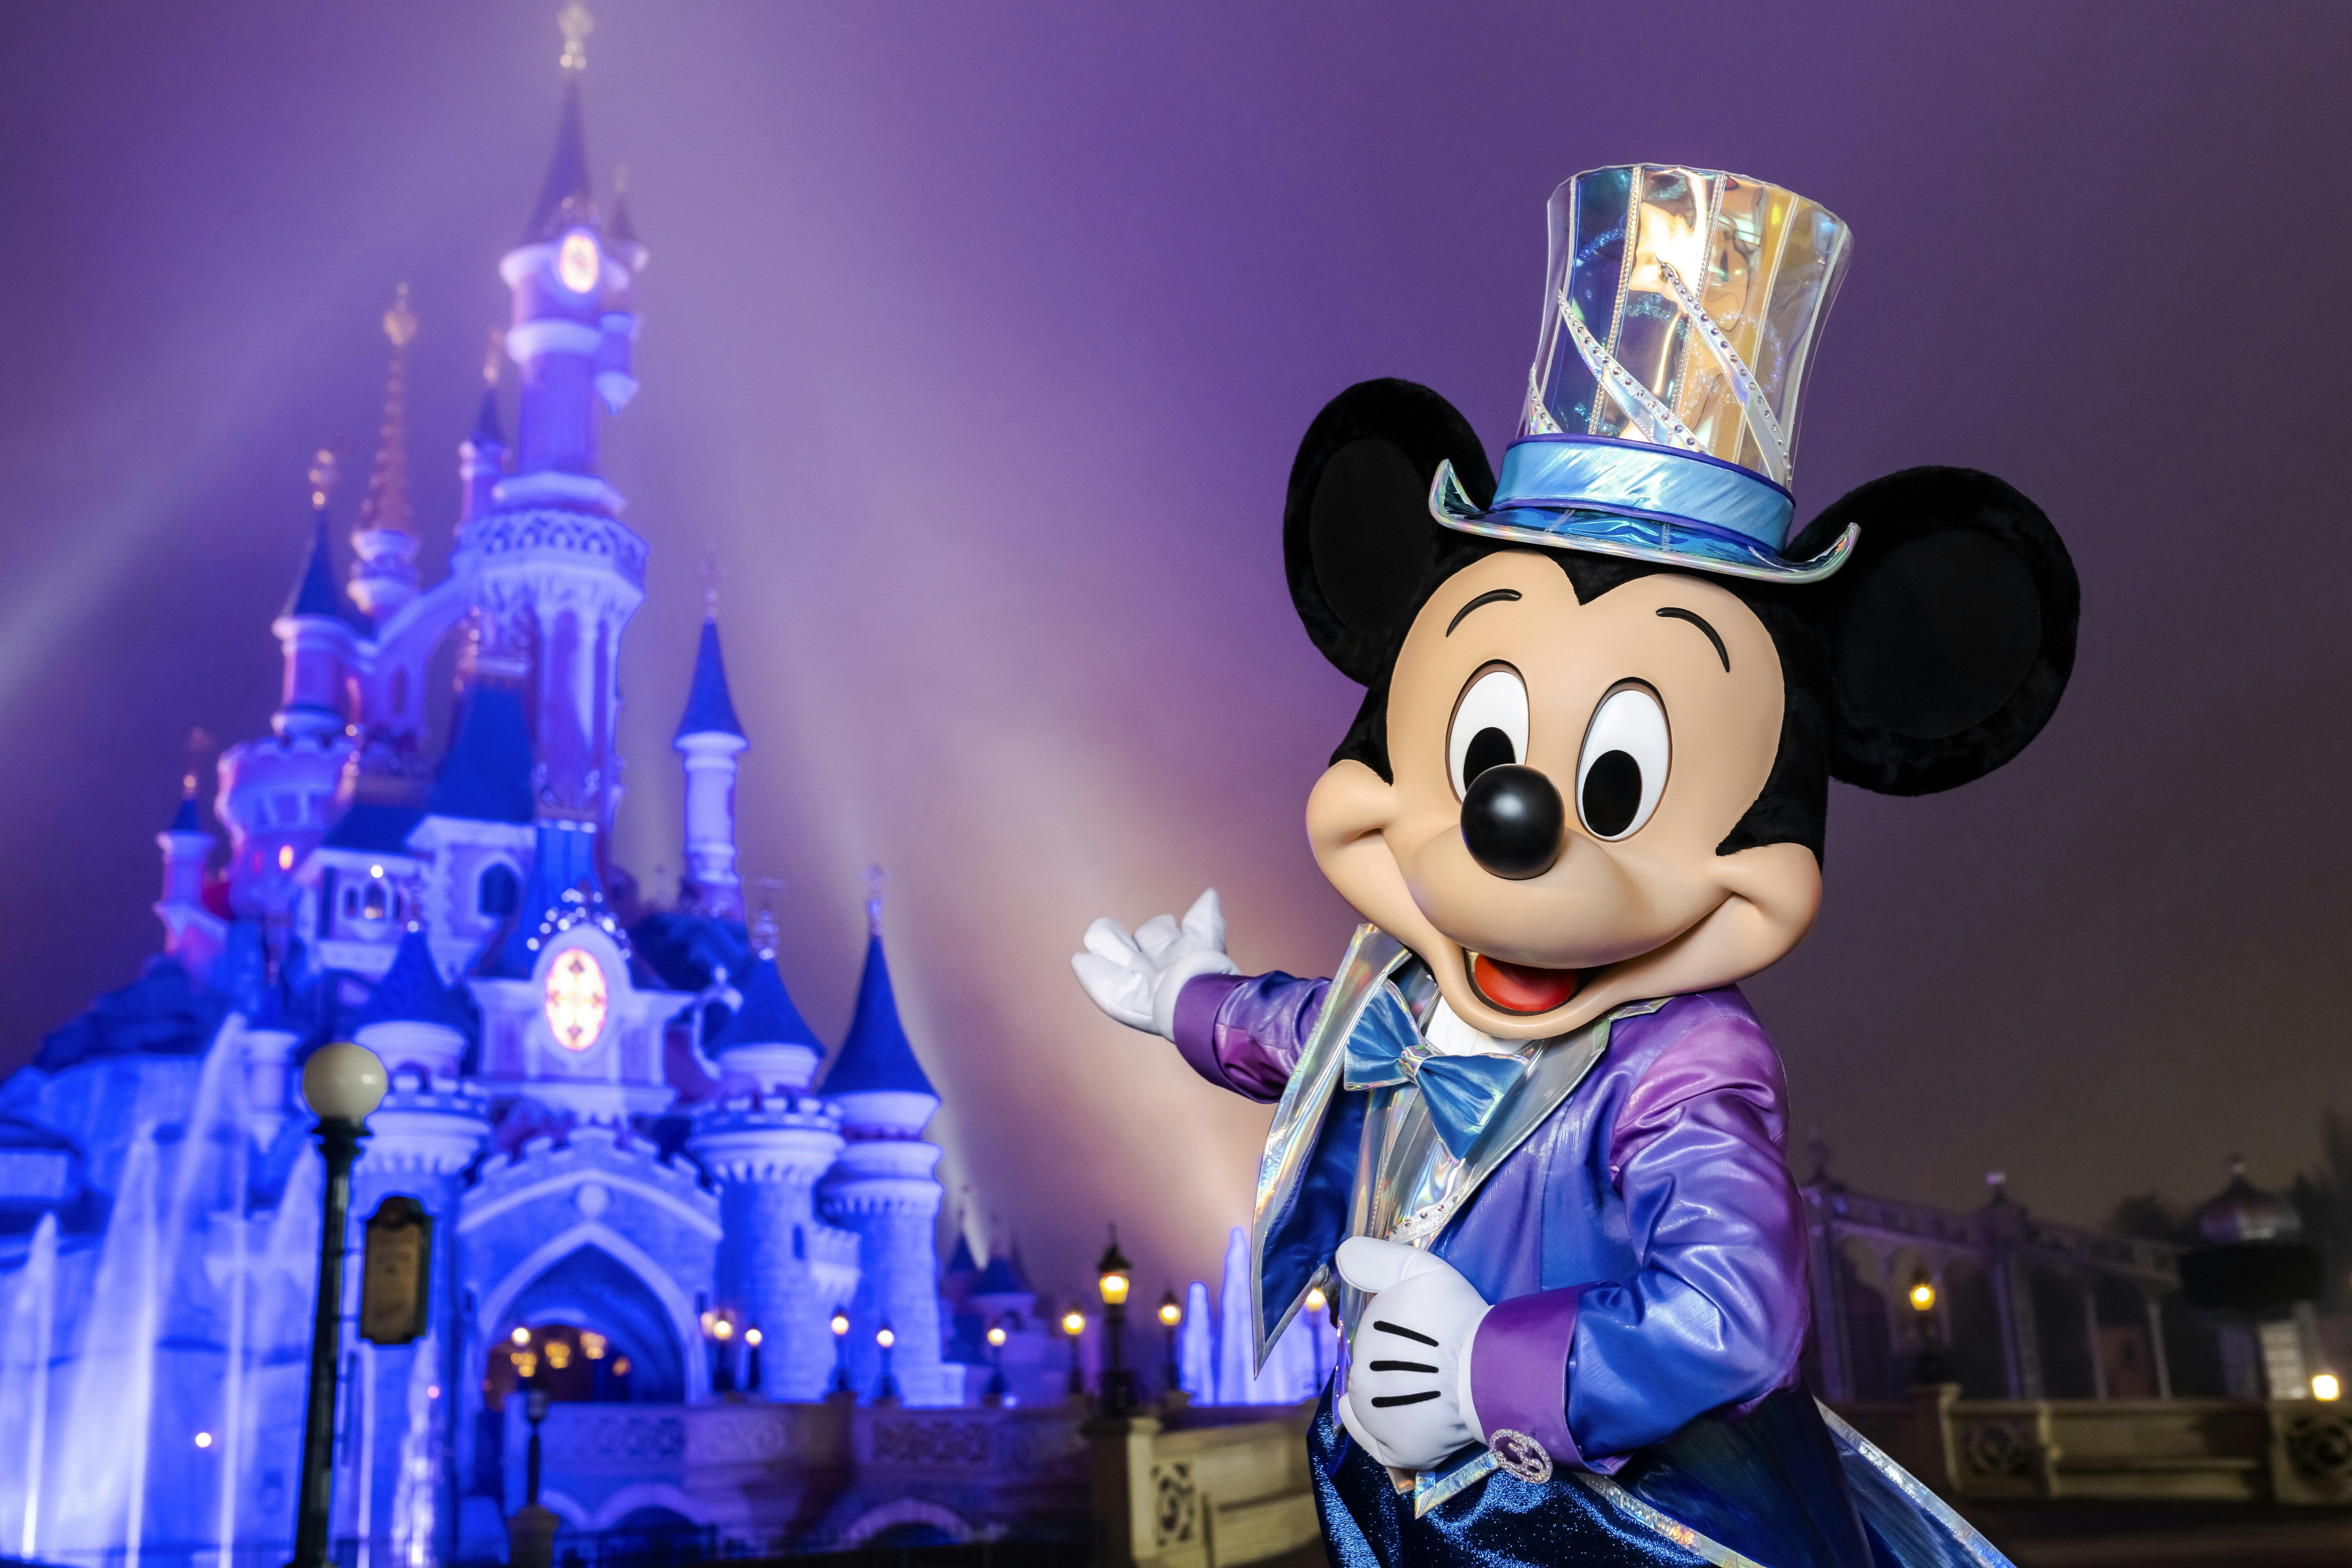 Disneyland Paris turns 30!